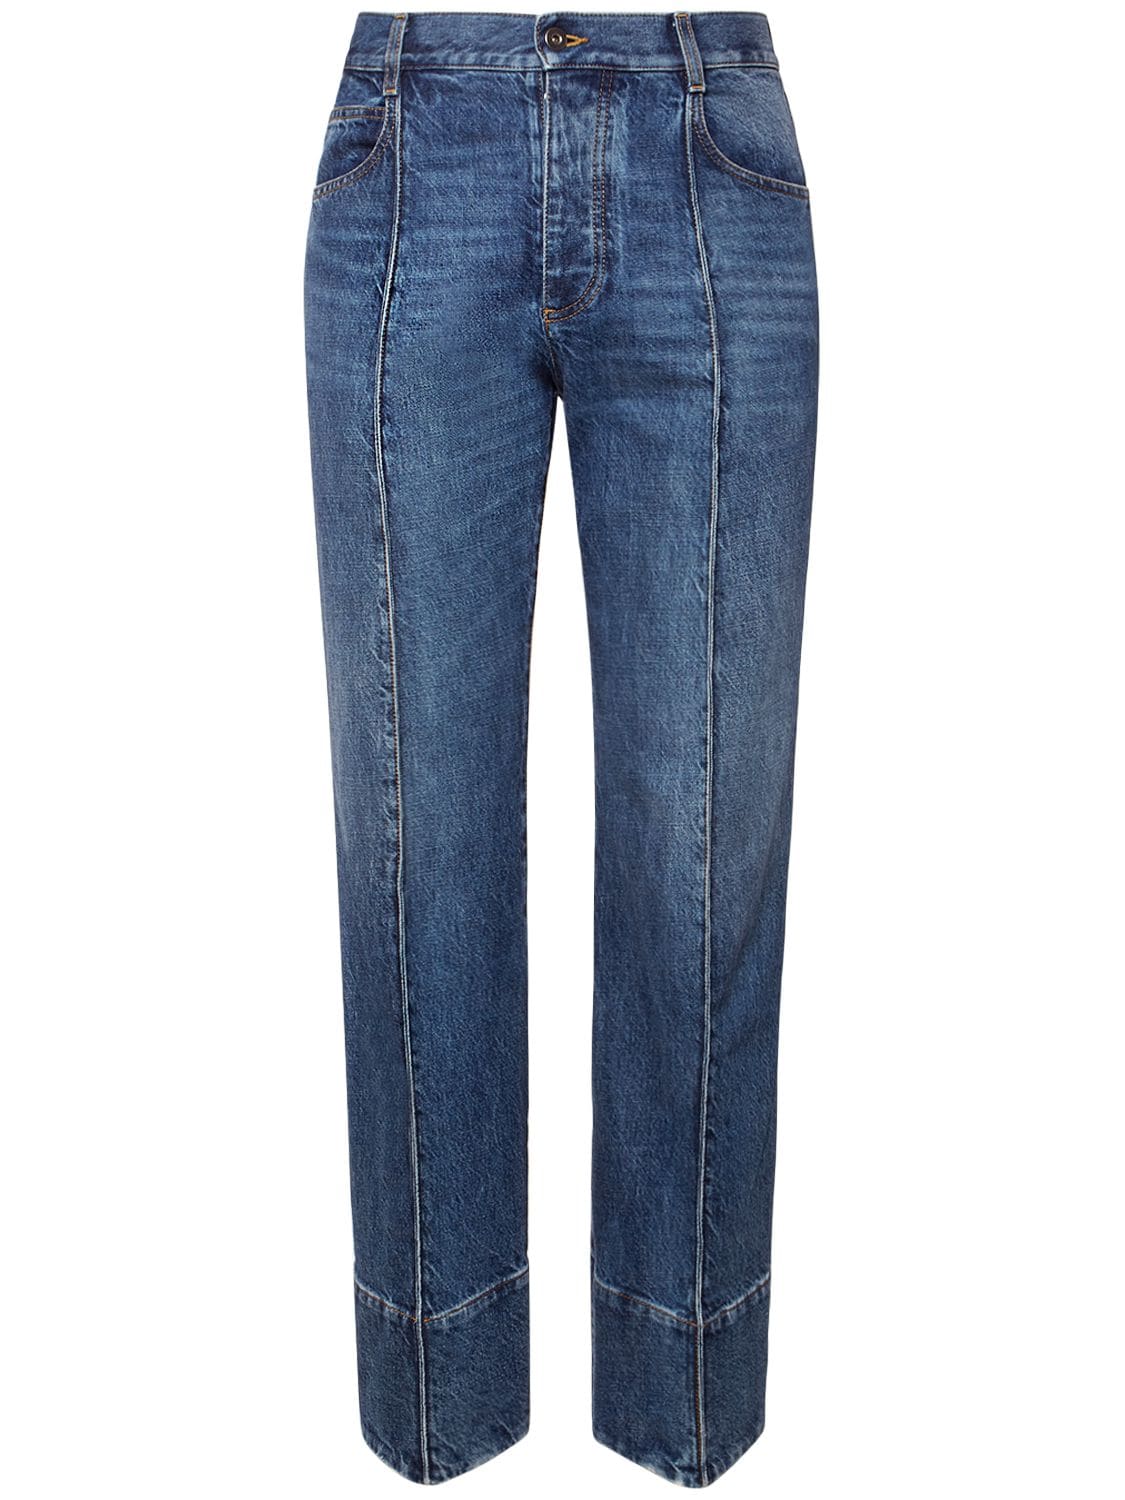 Curved Shape Denim Jeans – MEN > CLOTHING > JEANS